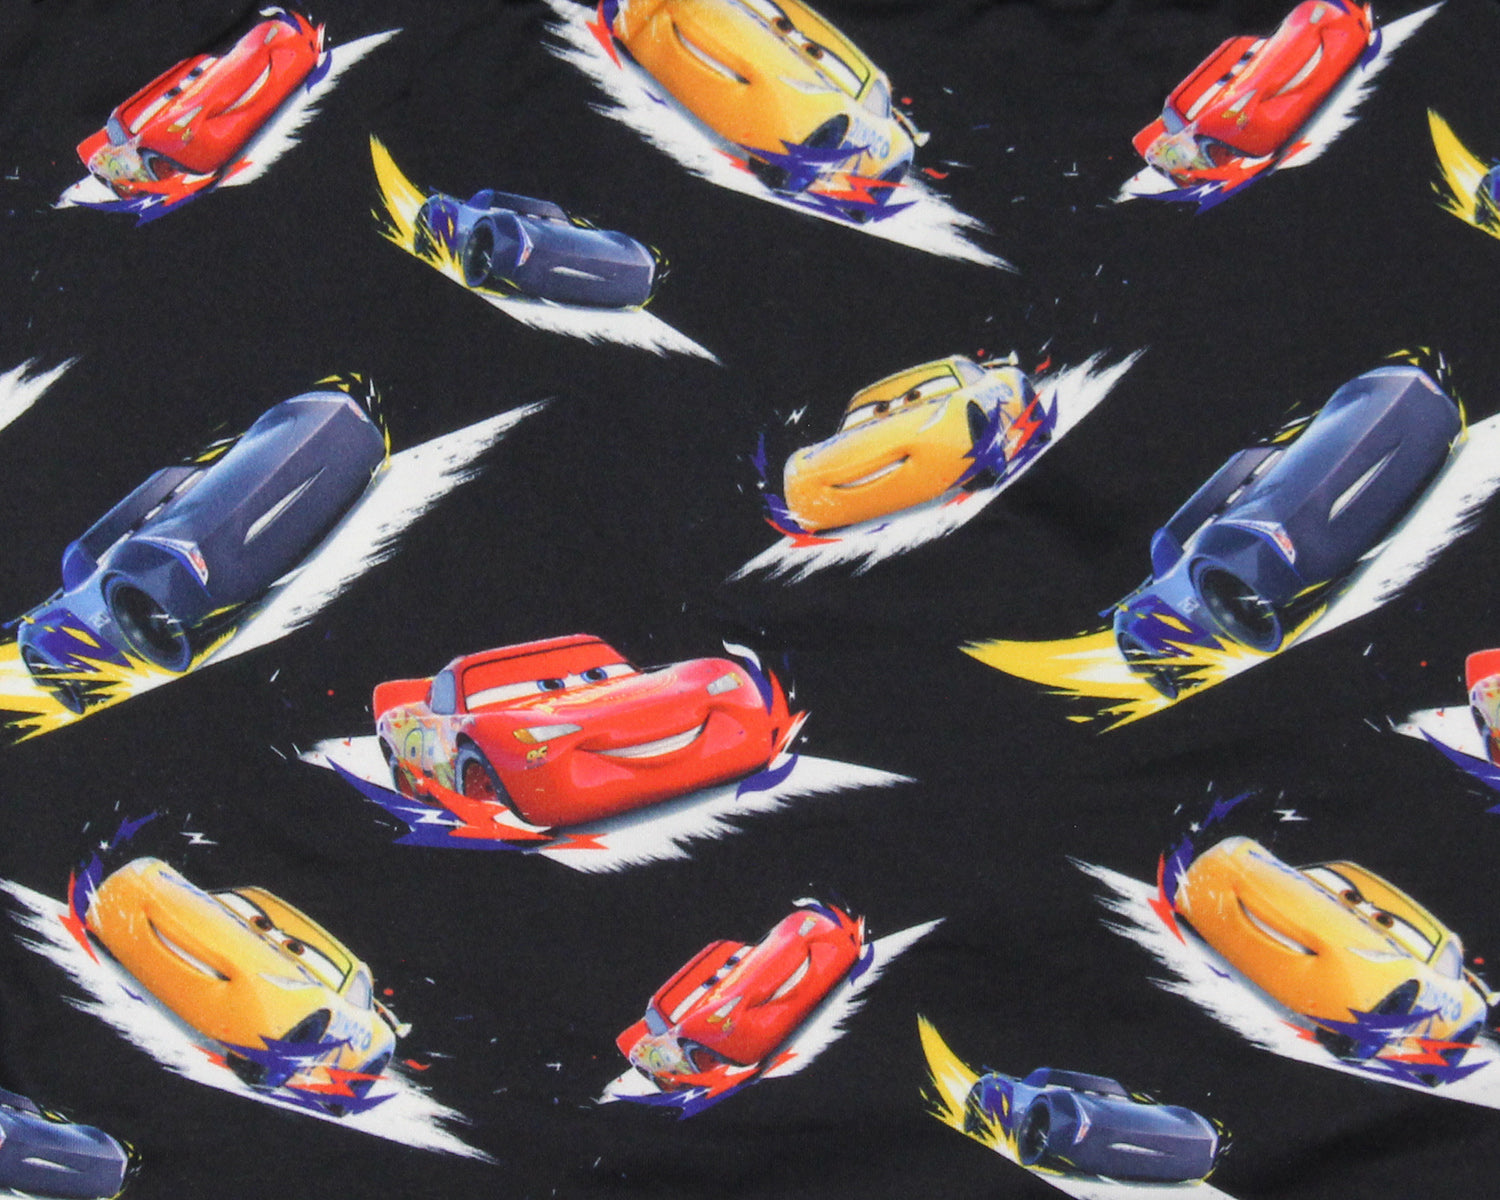 Disney Mens' Cars Lightning McQueen Tag-Free Boxers Underwear